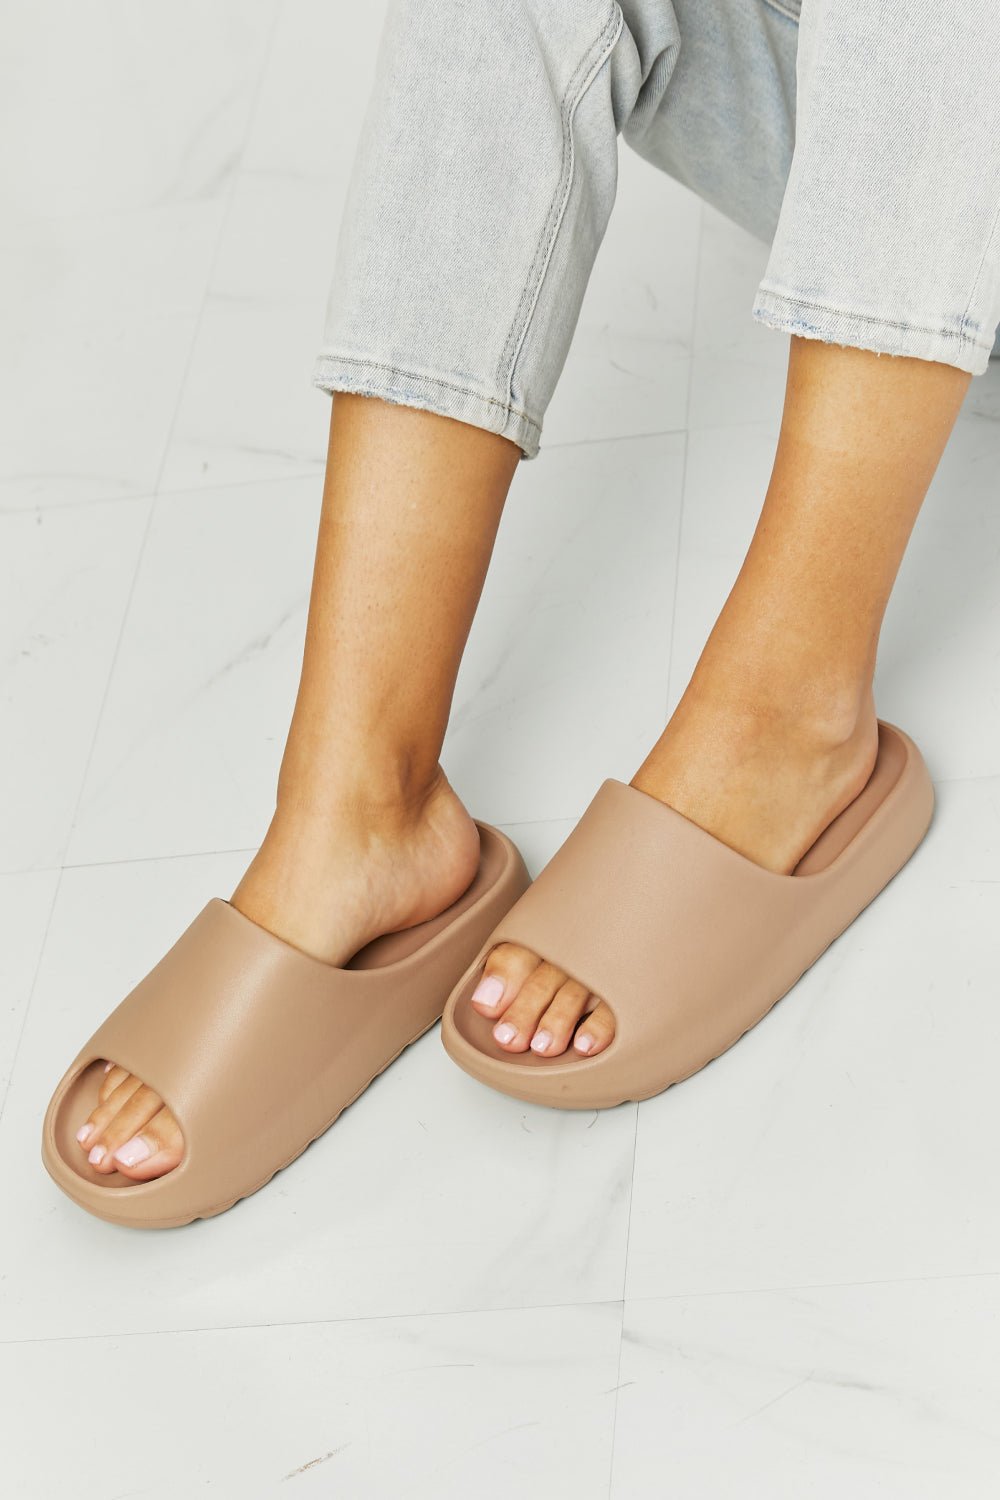 Open Toe Rubber Slide Sandals in SandSlidesNOOK JOI